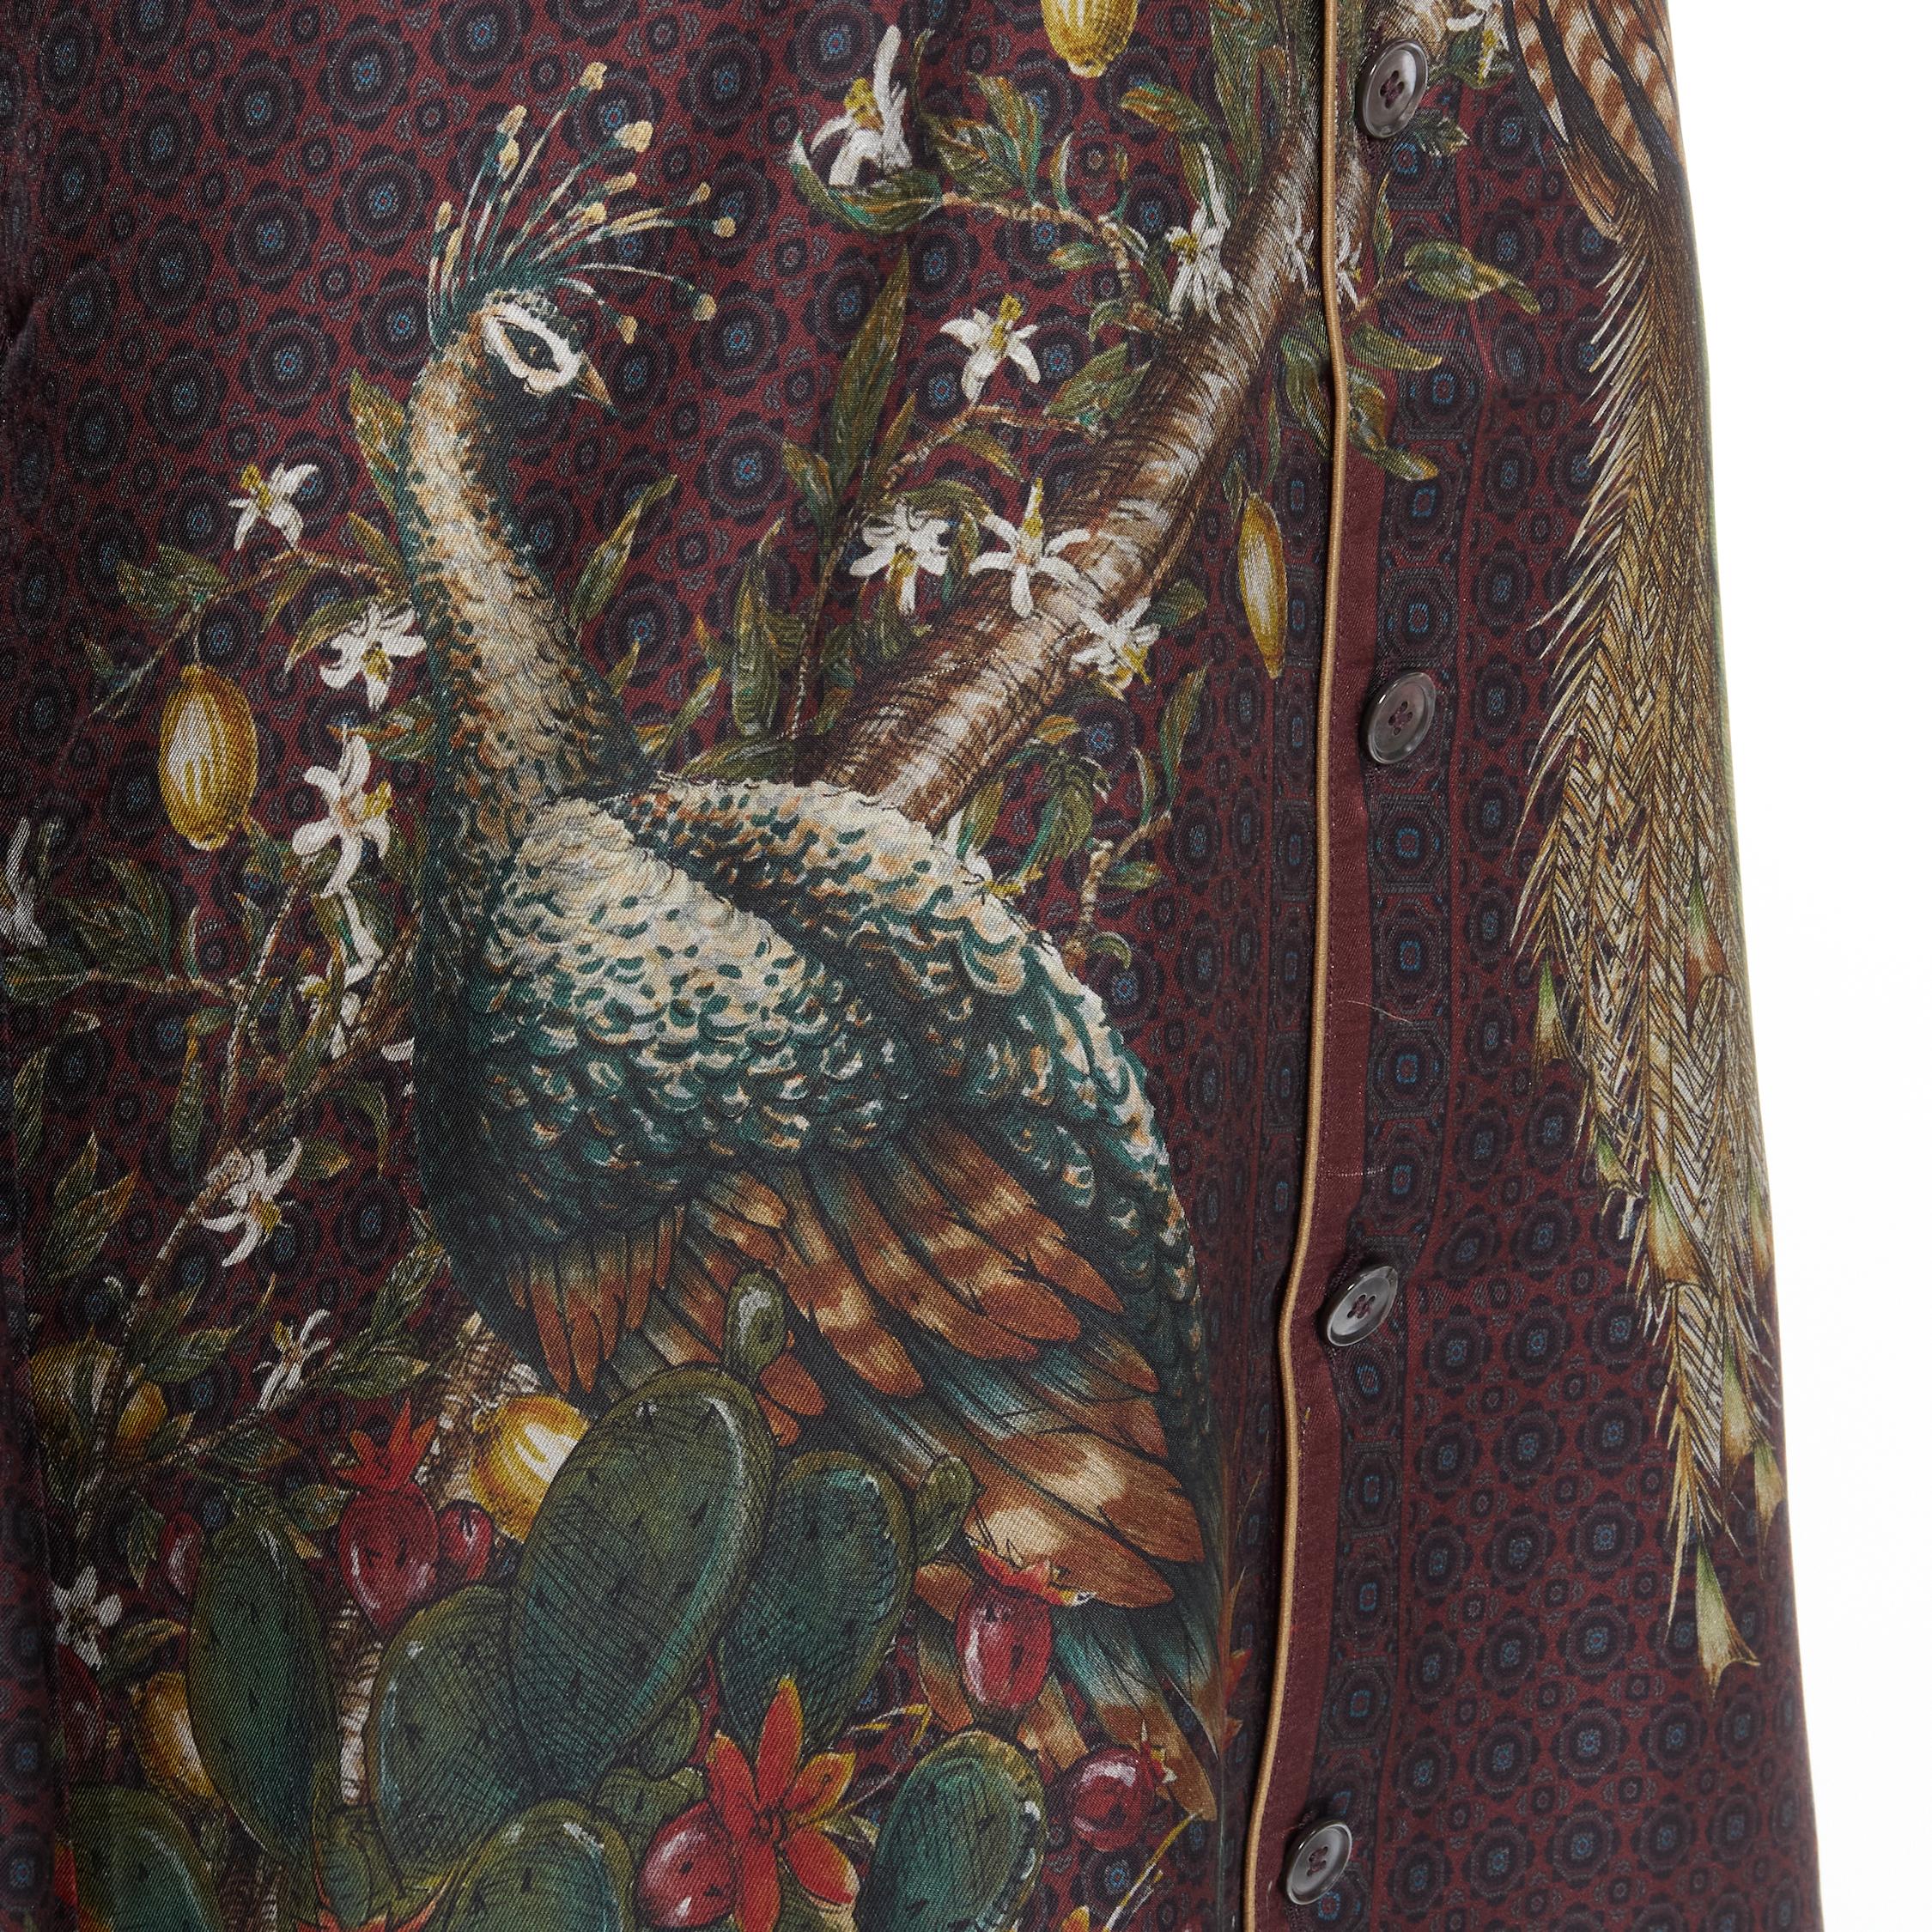 DOLCE GABBANA 100% silk burgundy geometric peacock lemon tree print shirt EU39 M Reference: TGAS/B01276 
Brand: Dolce Gabbana 
Material: Silk 
Color: Burgundy 
Pattern: Floral 
Closure: Button 
Extra Detail: Peacock print. Pajama shirt. 
Made in: